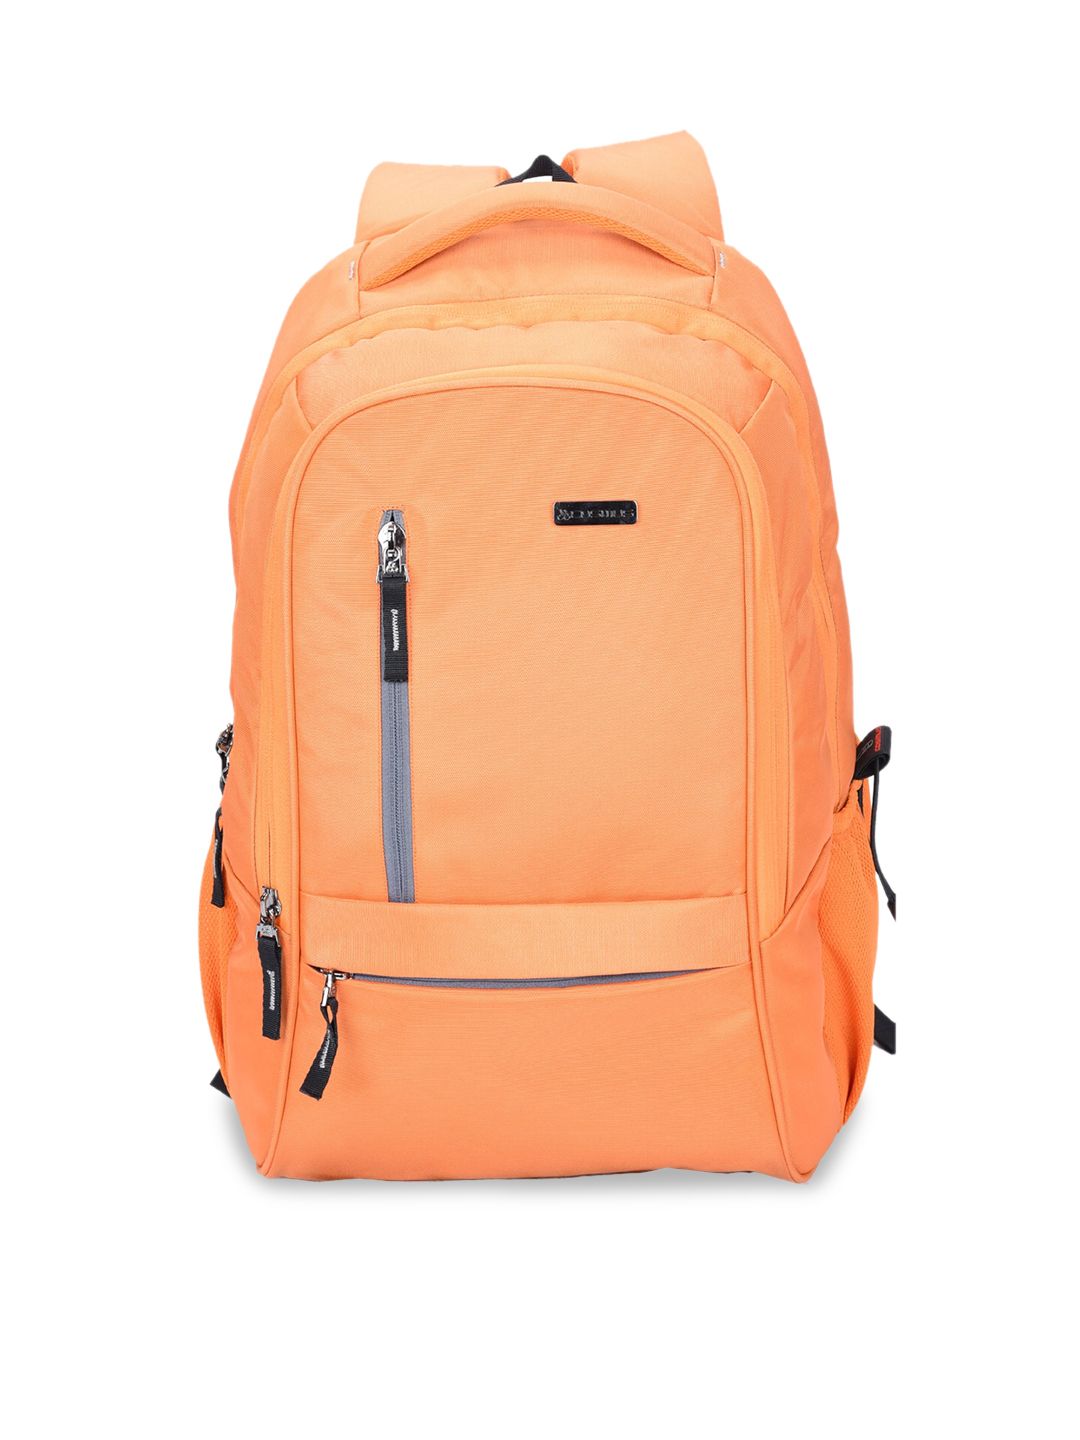 COSMUS Unisex Orange Solid Backpack Price in India